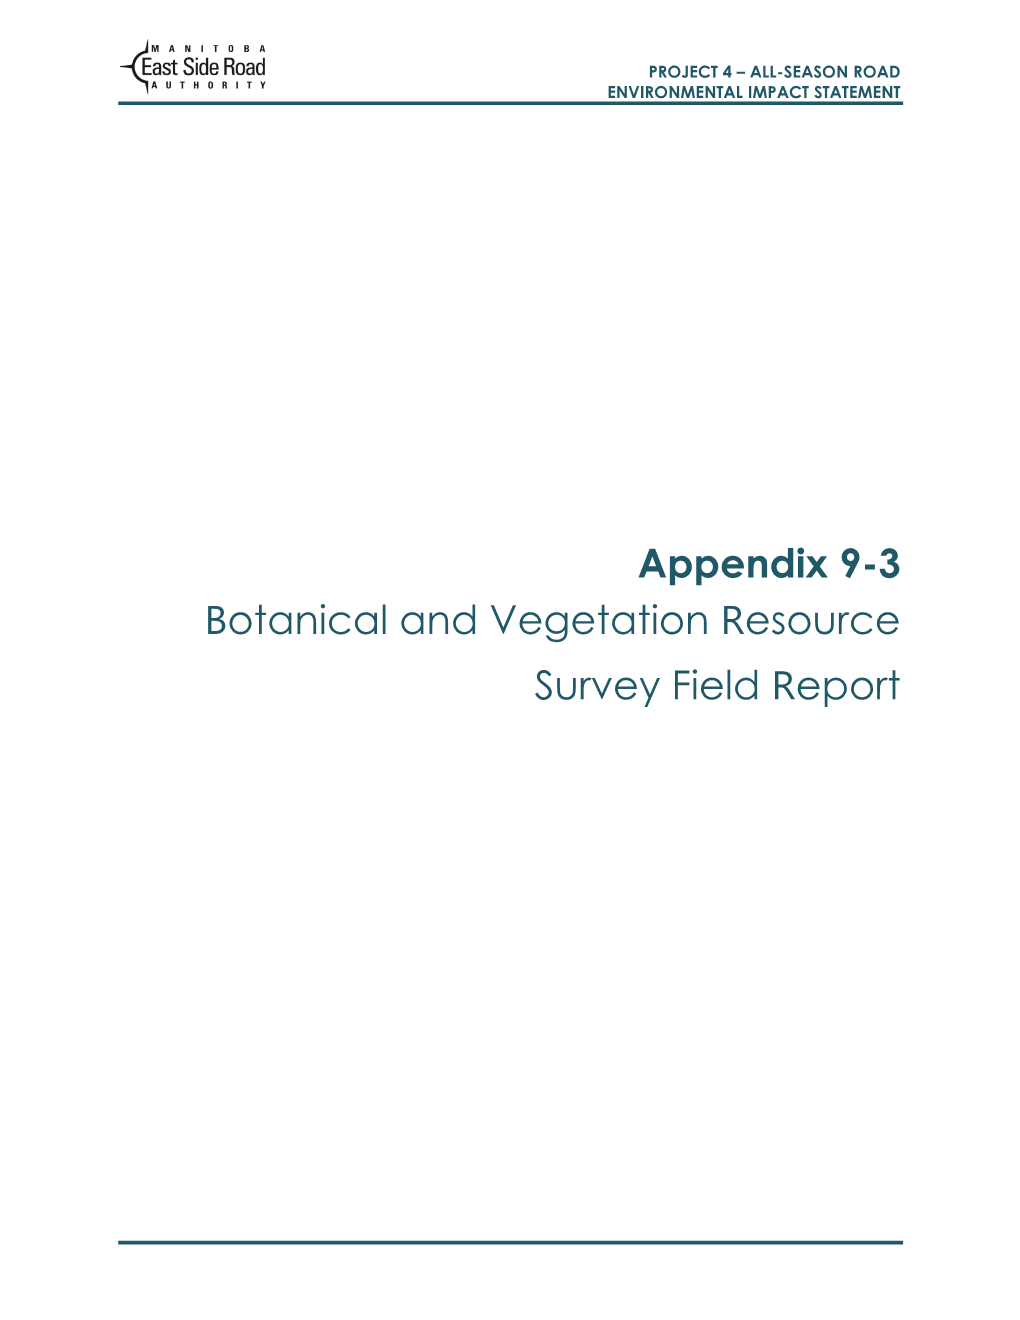 Appendix 9-3 Botanical and Vegetation Resource Survey Field Report